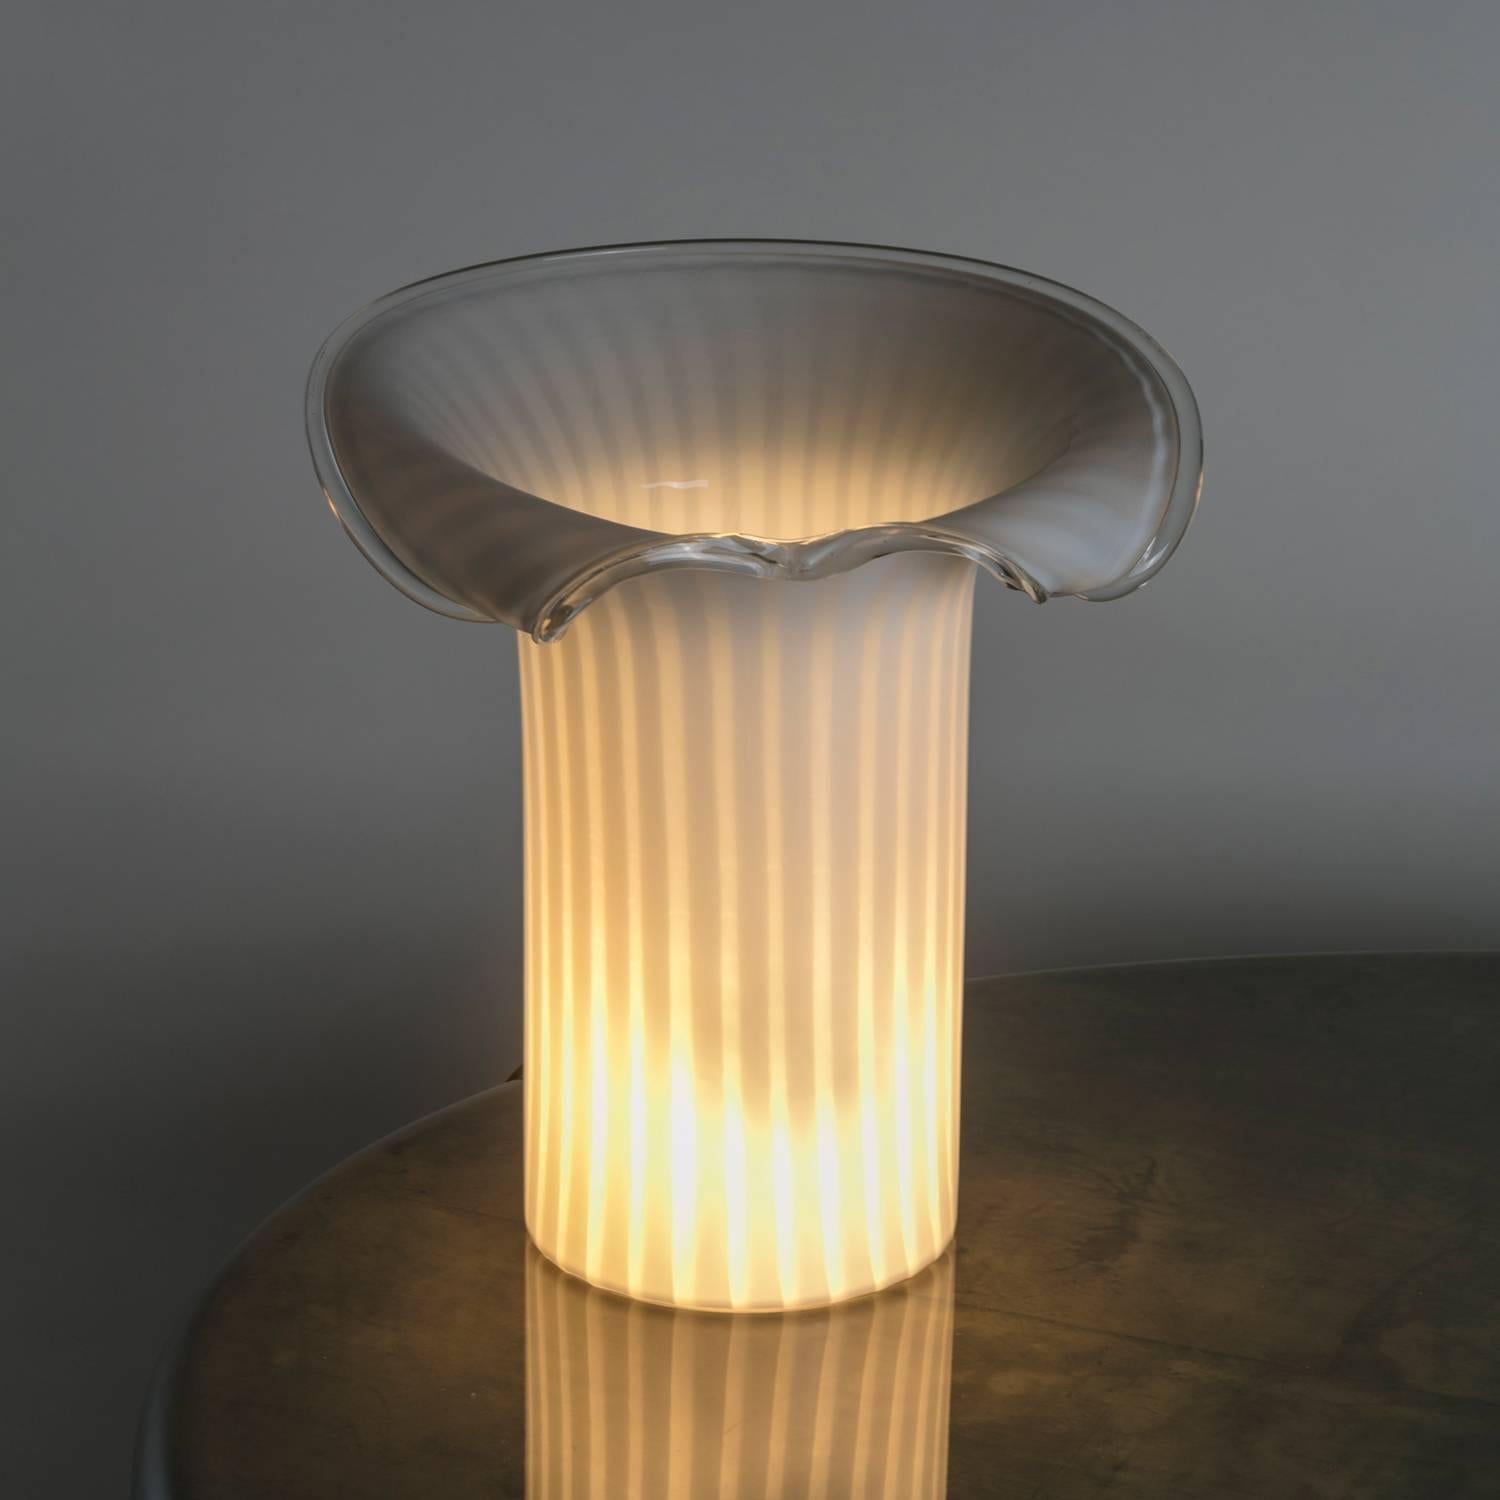 Marvelous Murano table lamp.
